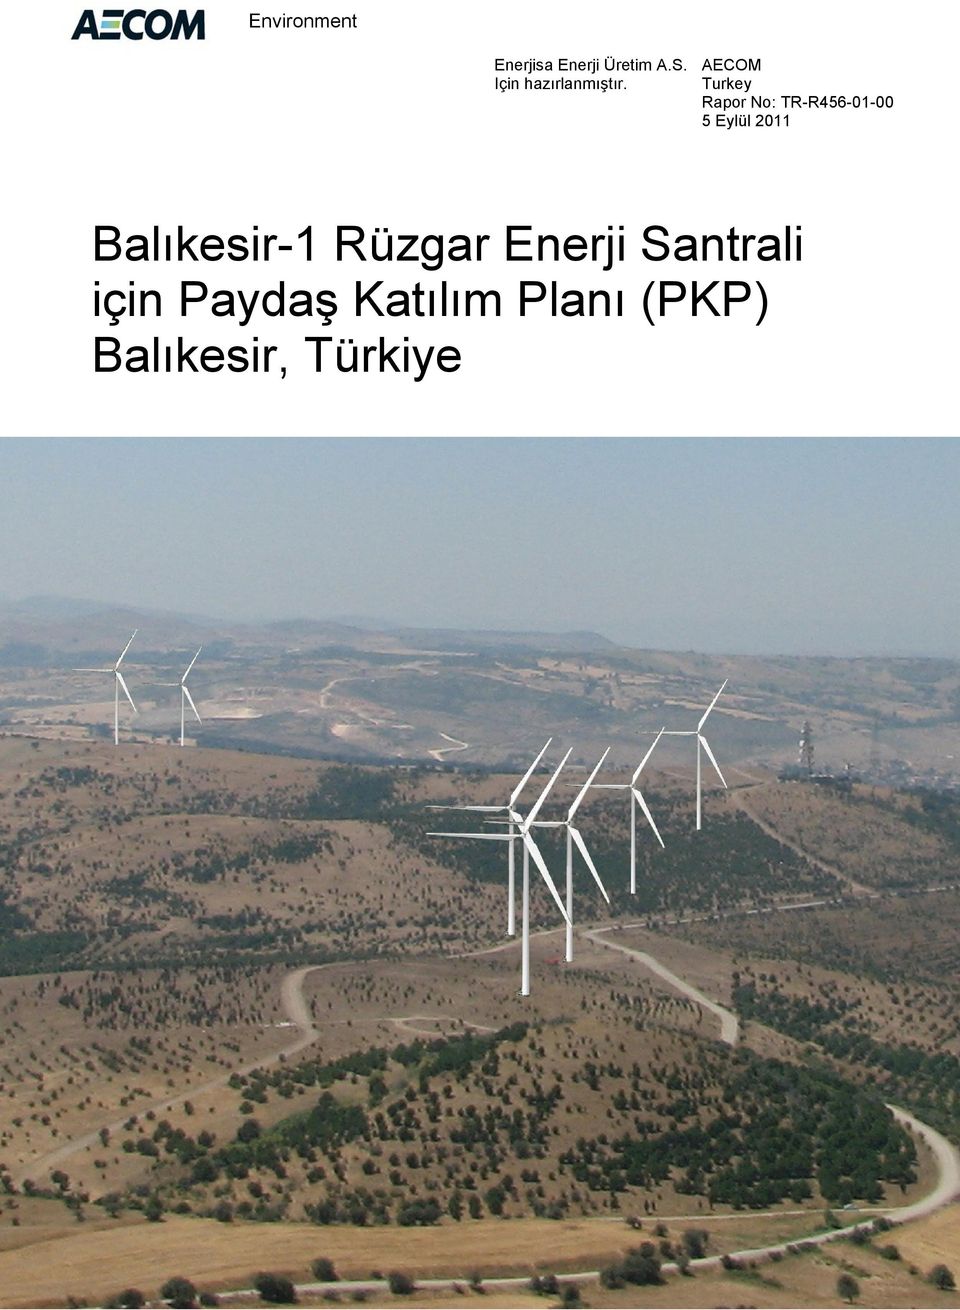 Turkey Rapor No: TR-R456-01-00 5 Eylül 2011